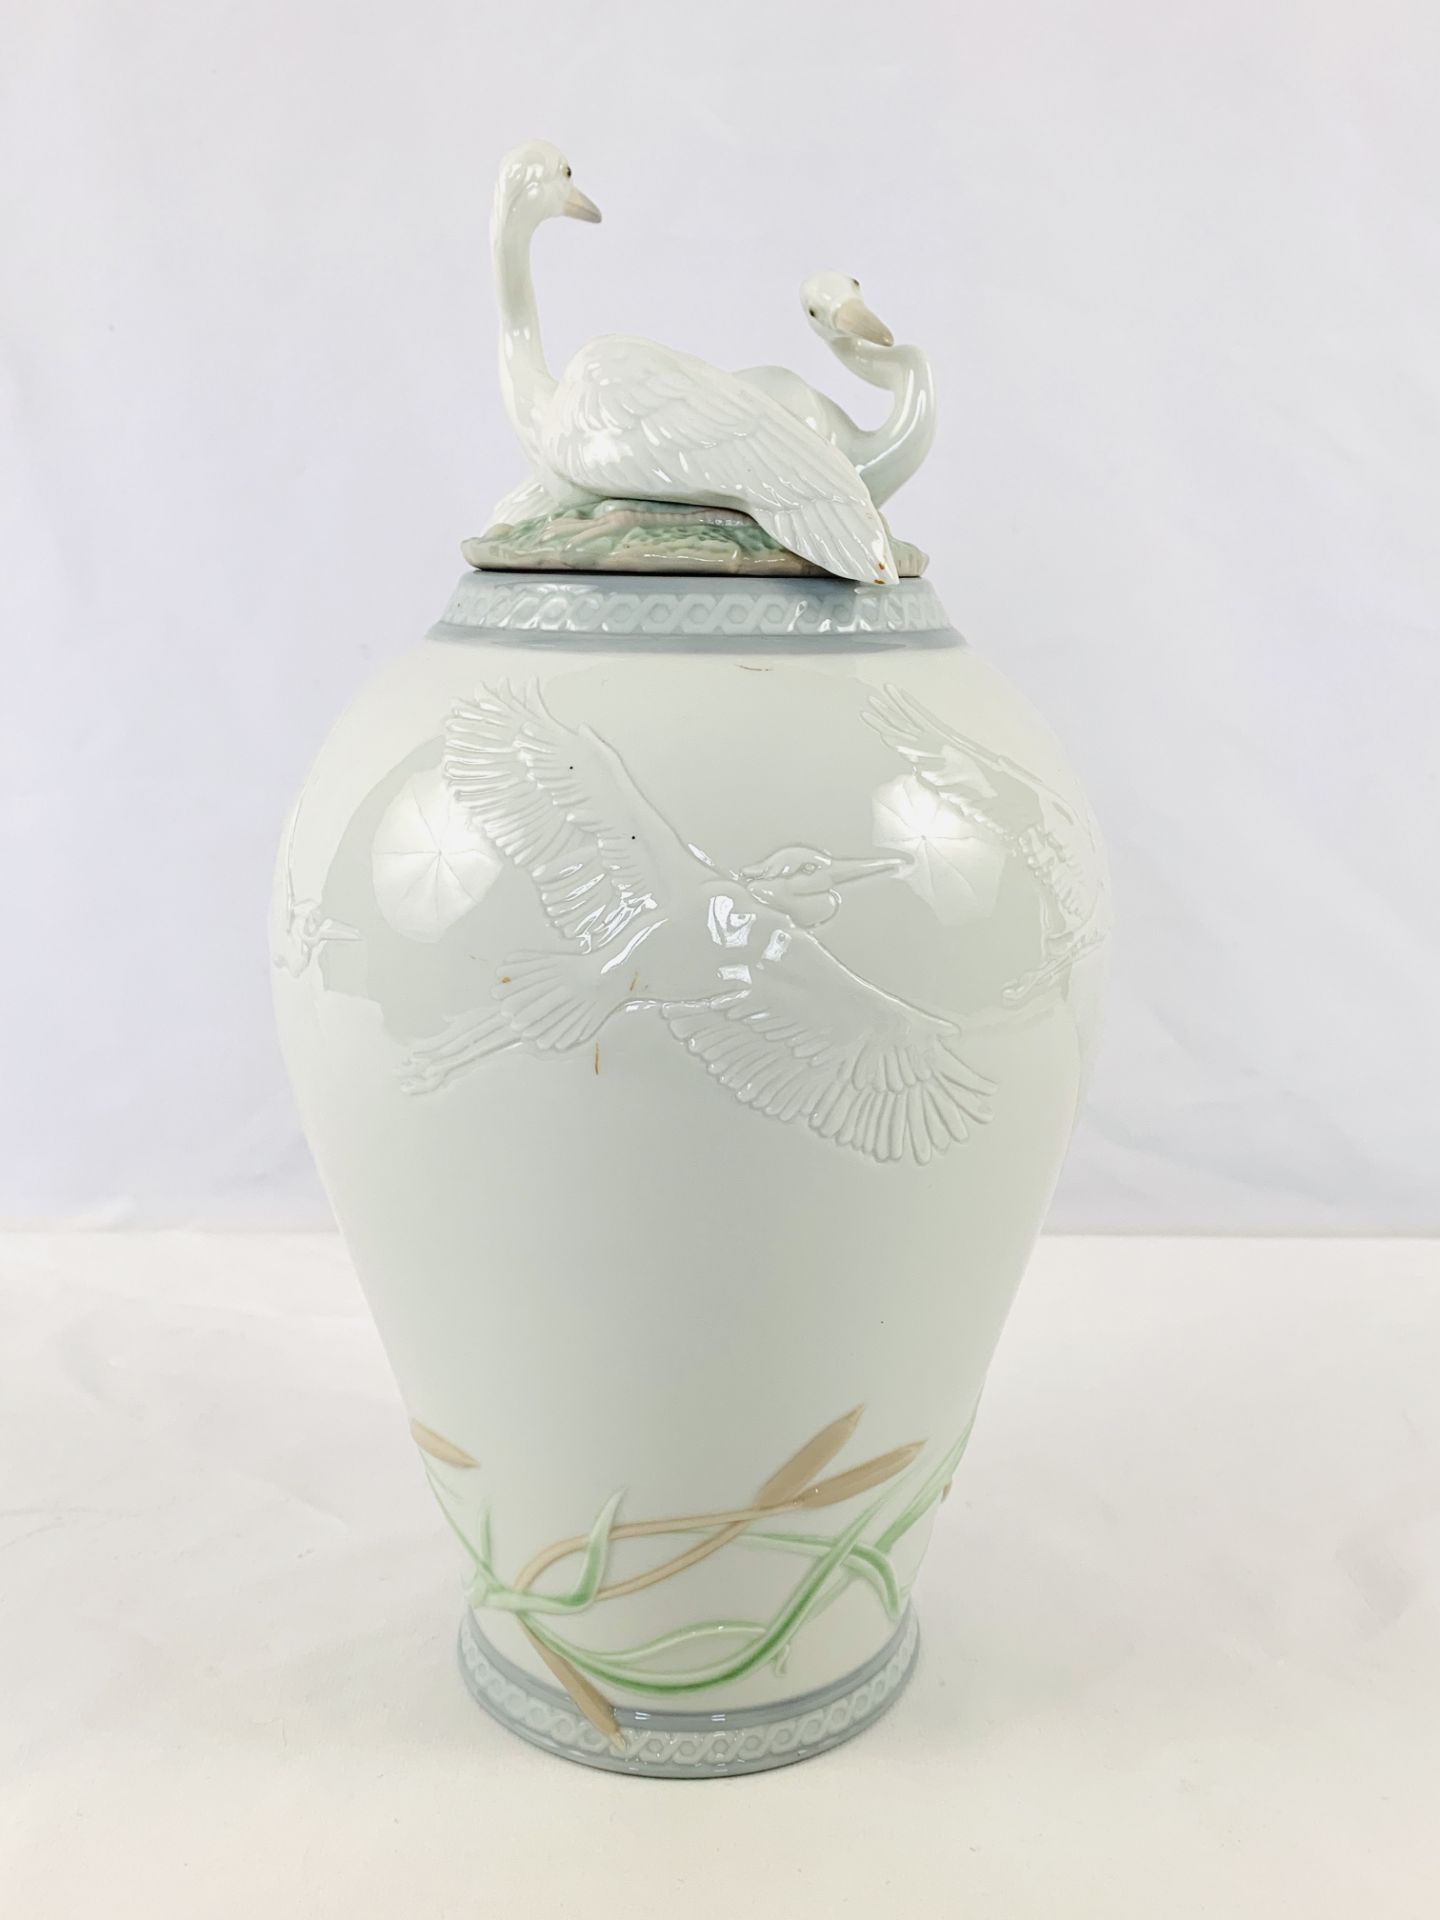 Lladro 'Herons Realm' lidded vase - Image 3 of 5